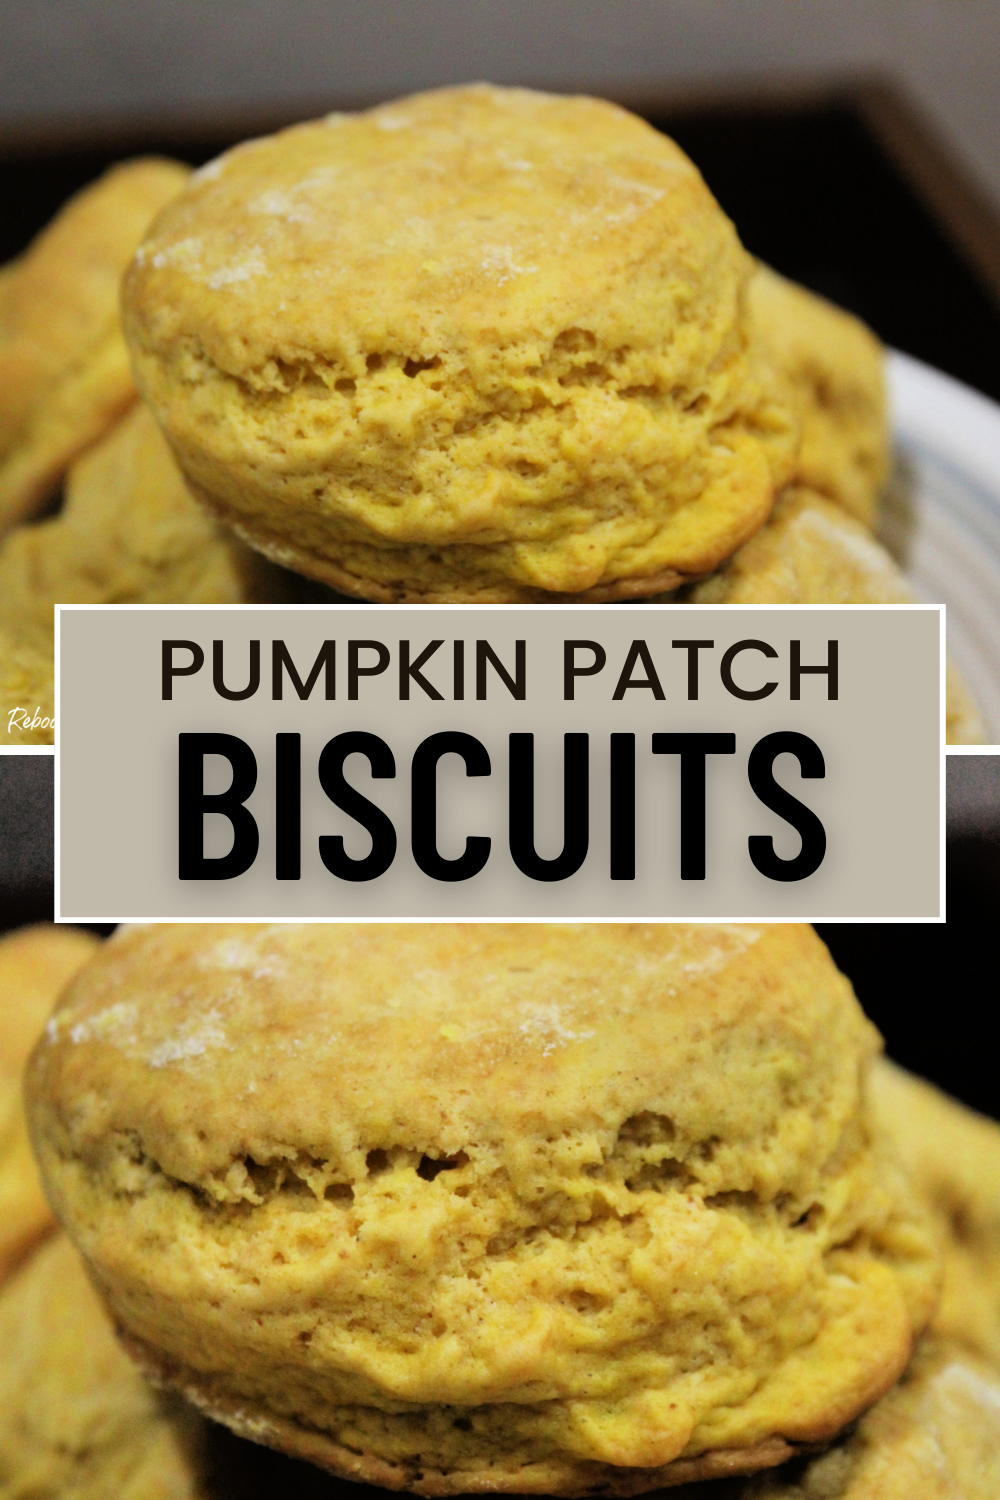 Pumpkin Patch Biscuits